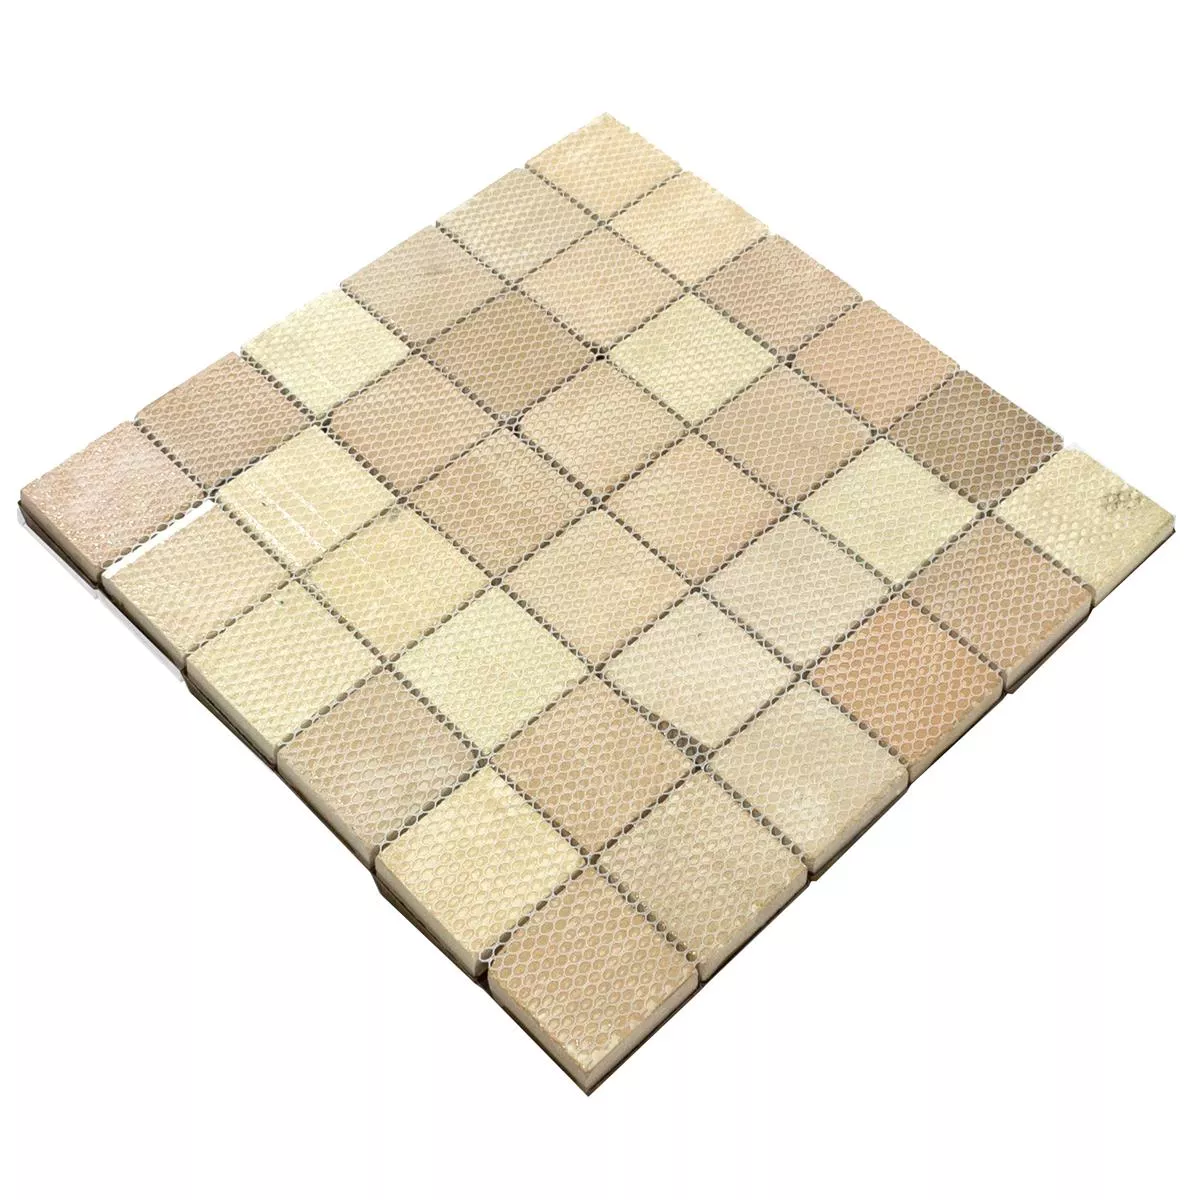 Metal Copper Mosaic Tiles Copperfield 3D 48x48mm